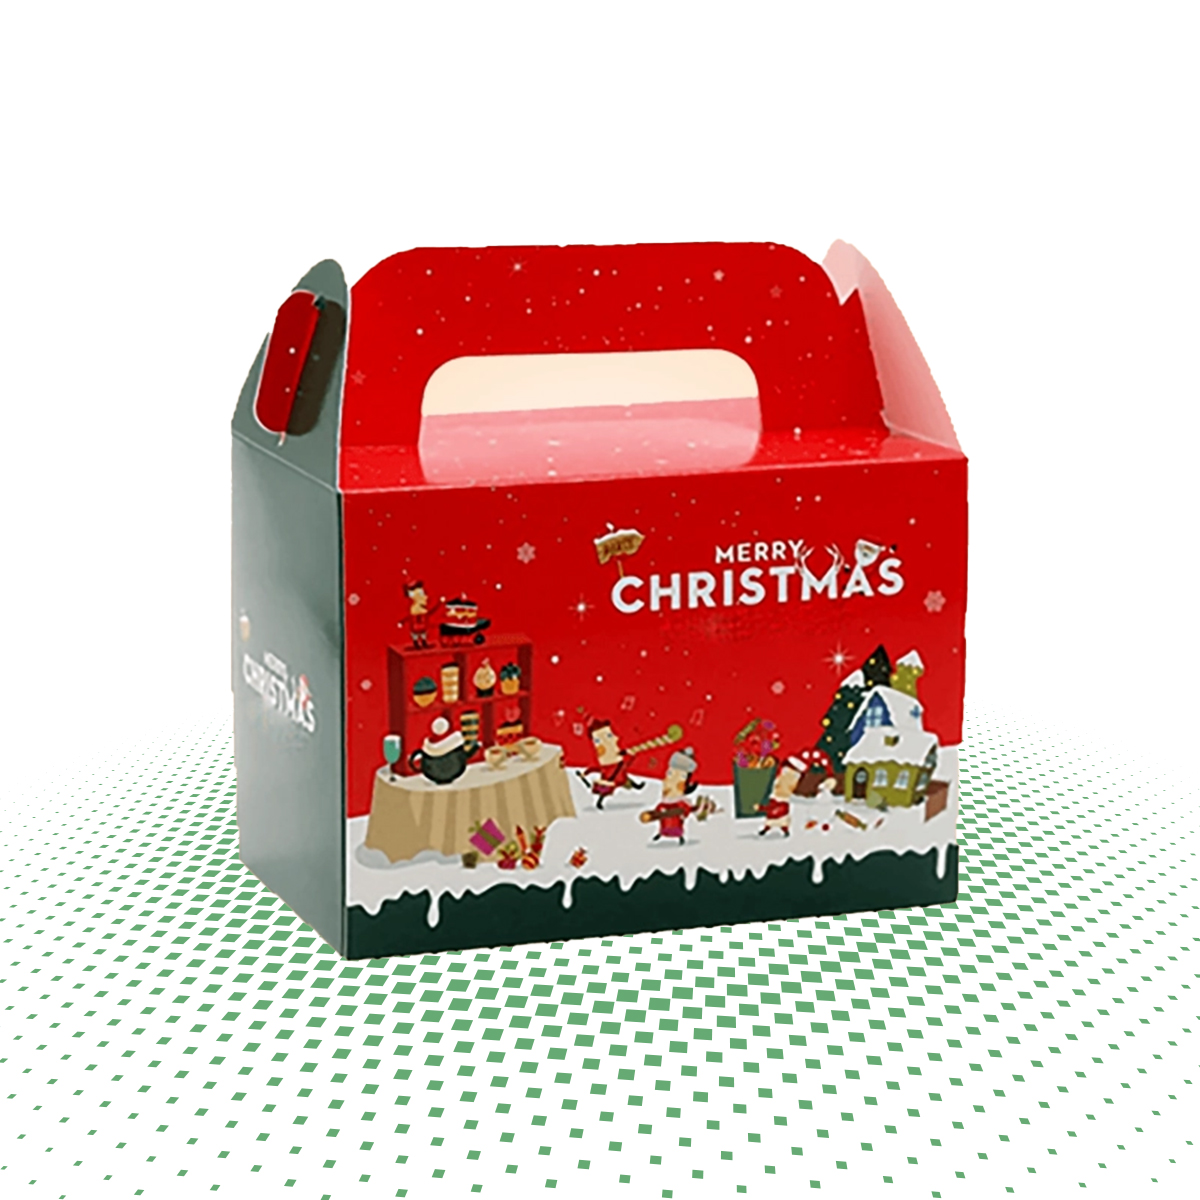 Christmas Favour Boxes - Texas - Arlington ID1517631